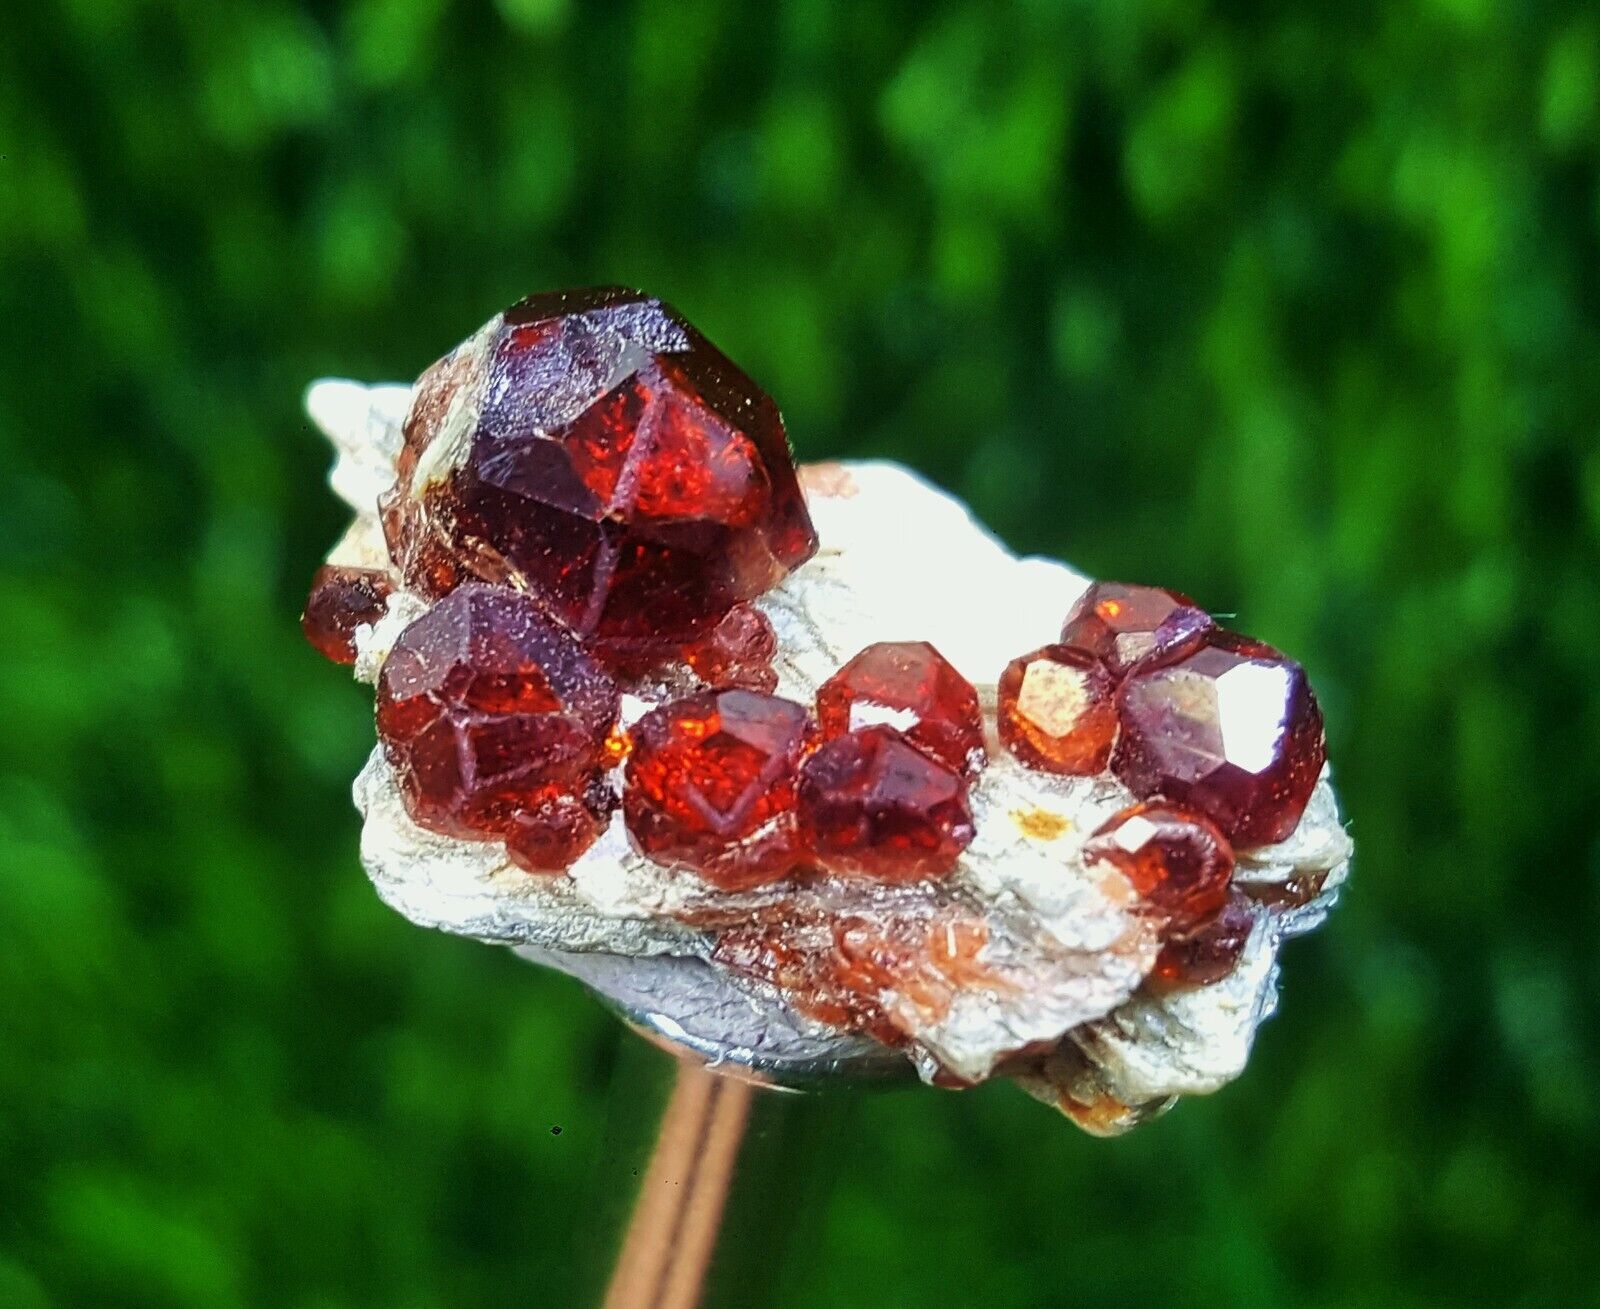 13 Carat Spessartine Garnet Terminated Crystals On Albite Specimen From Shigar